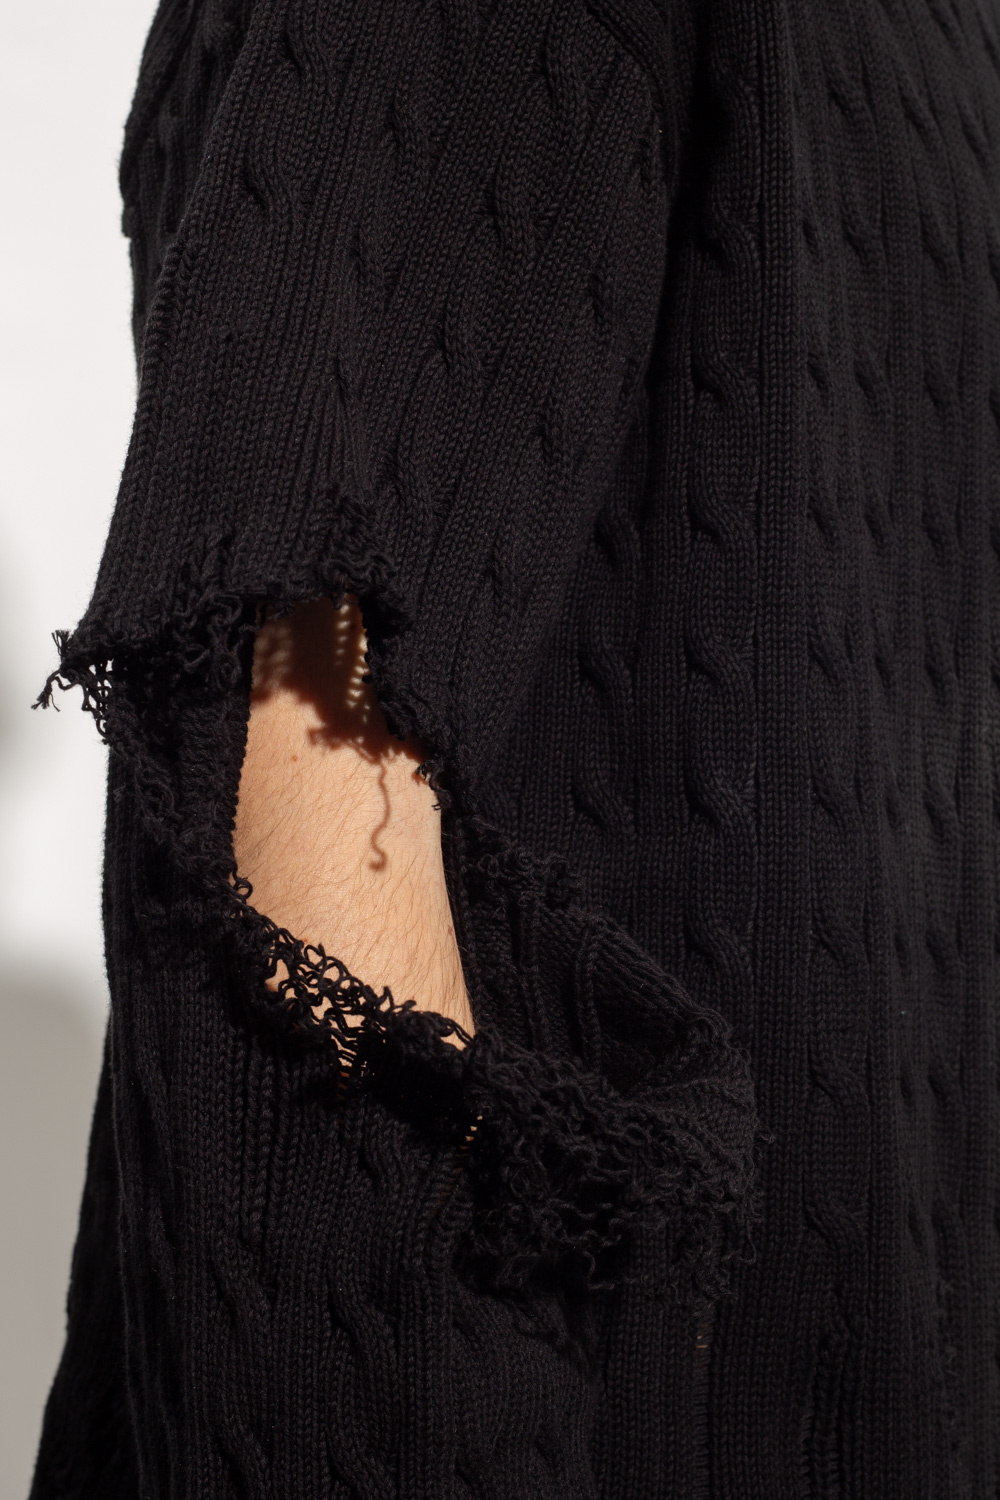 Balenciaga Low Brand panelled zip-up hoodie